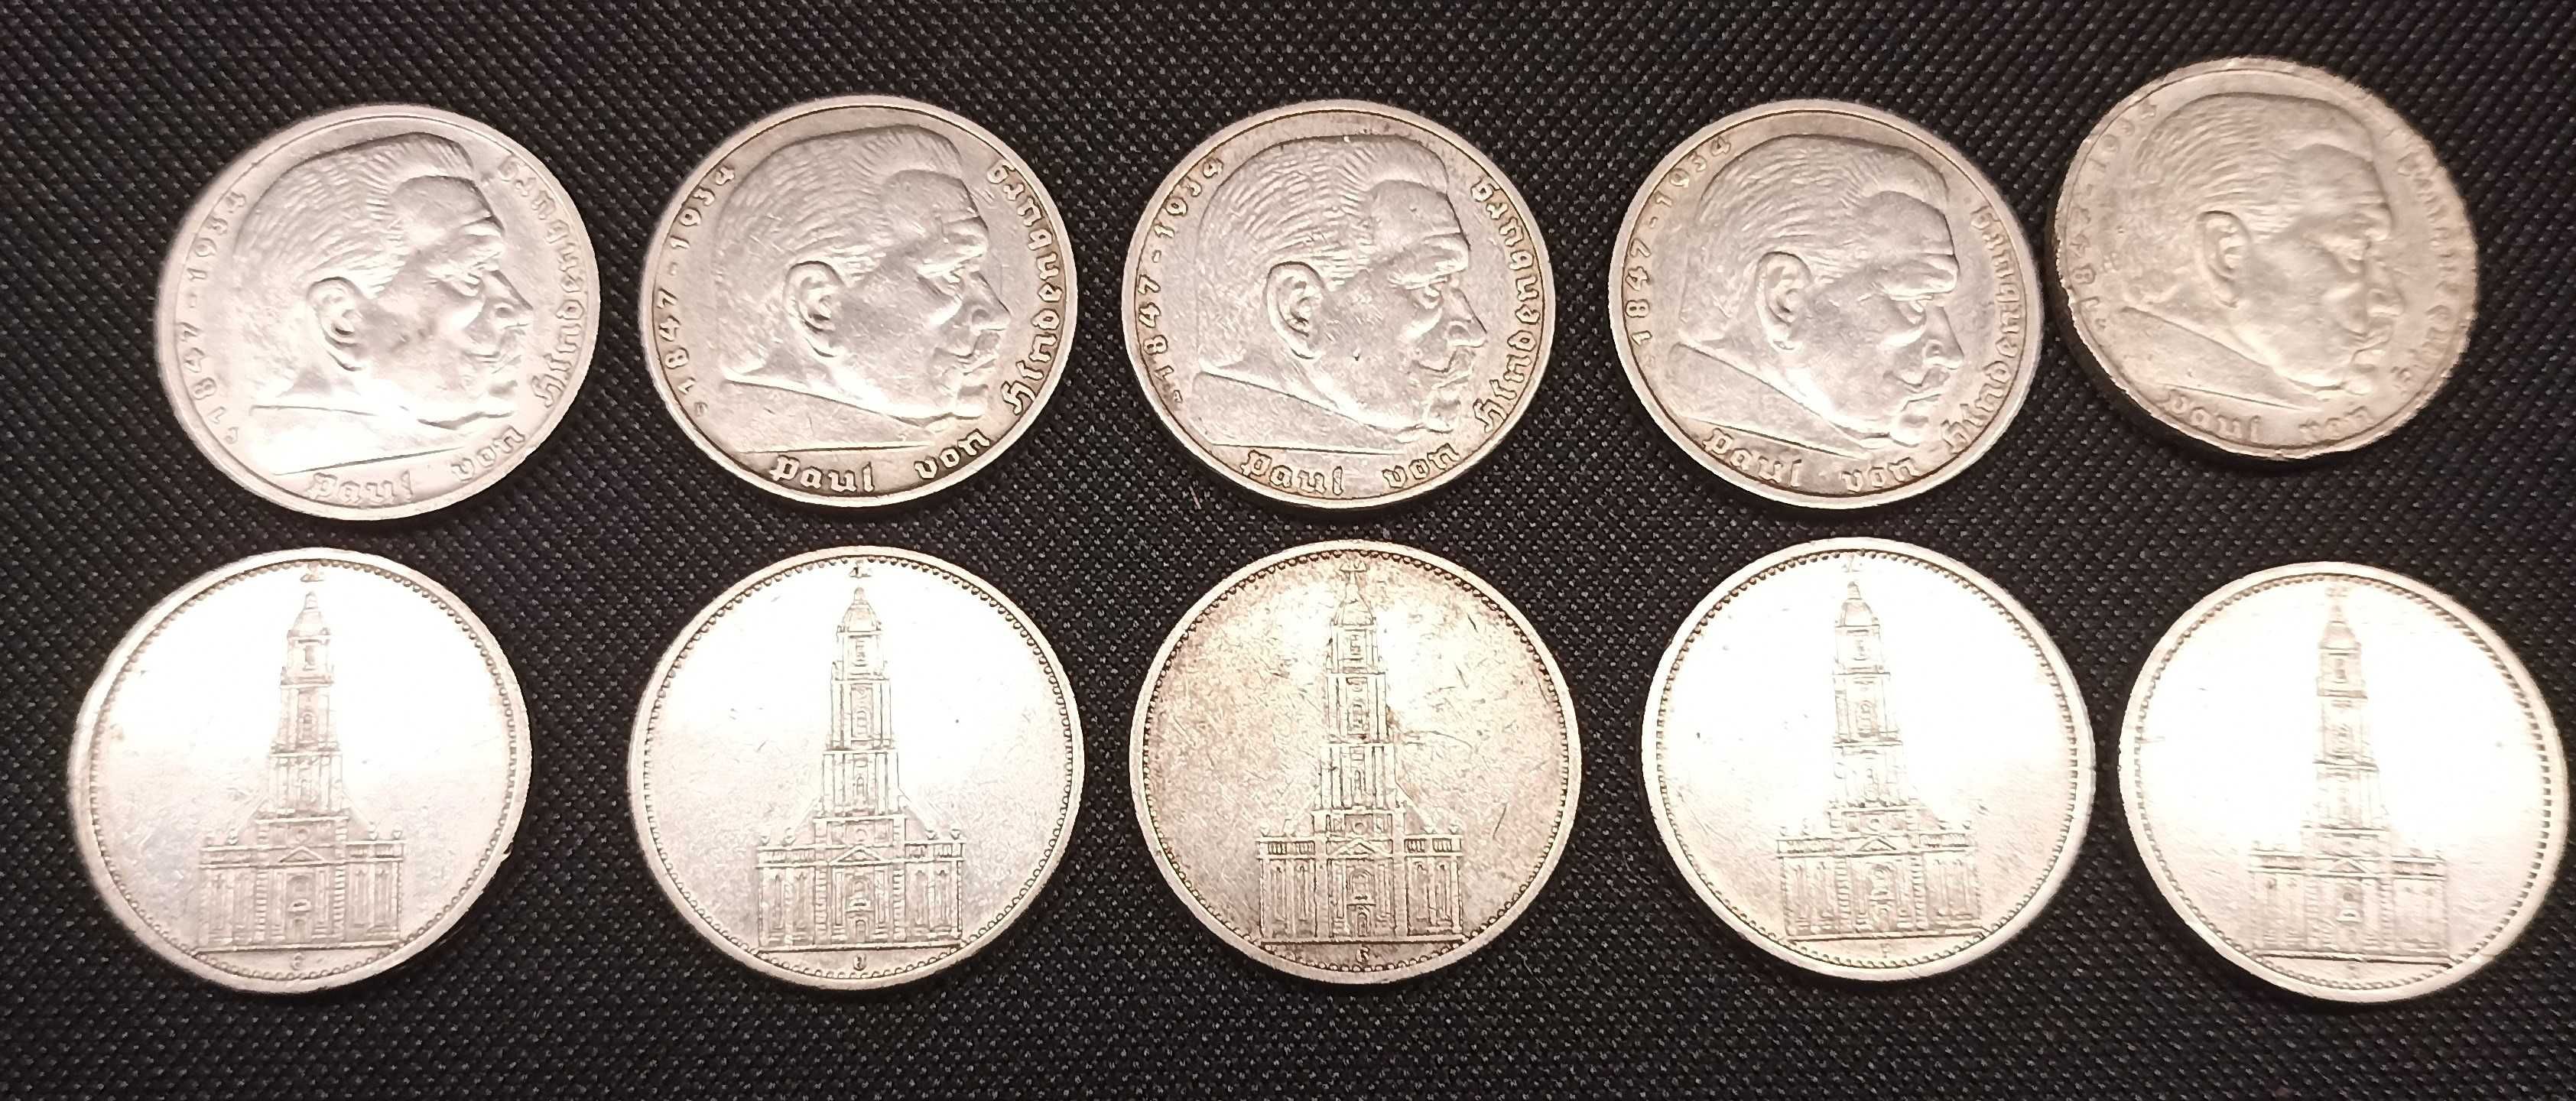 Monety srebrne  Niemcy 5 marek  Hindenburg * Wieża  - zestaw 10 sztuk